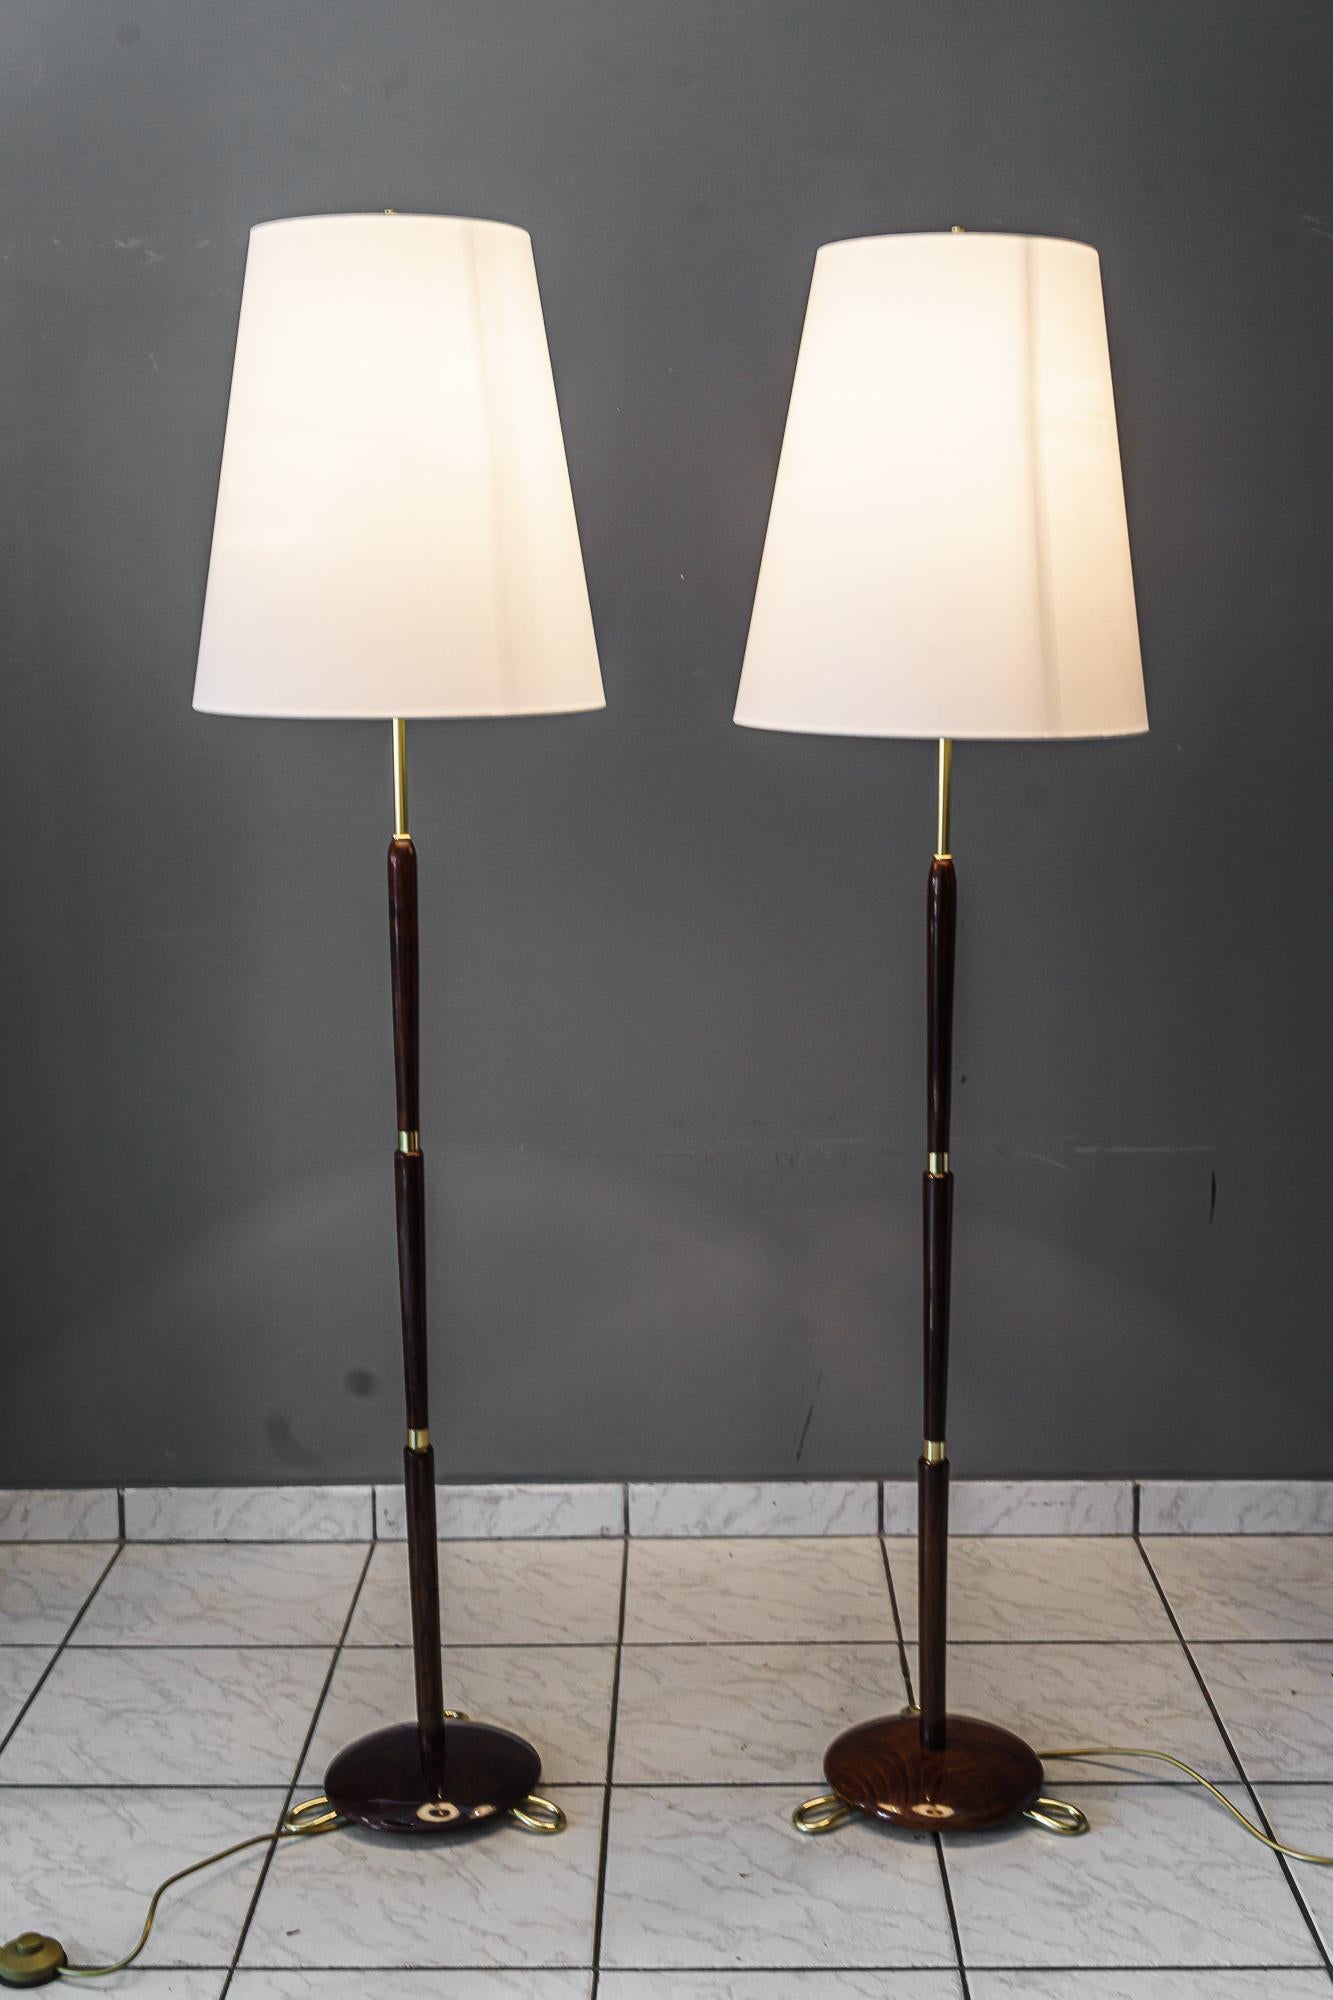 2 Rupert Nikoll Floor Lamps 'Almost Same' Vienna Around 1960 For Sale 1